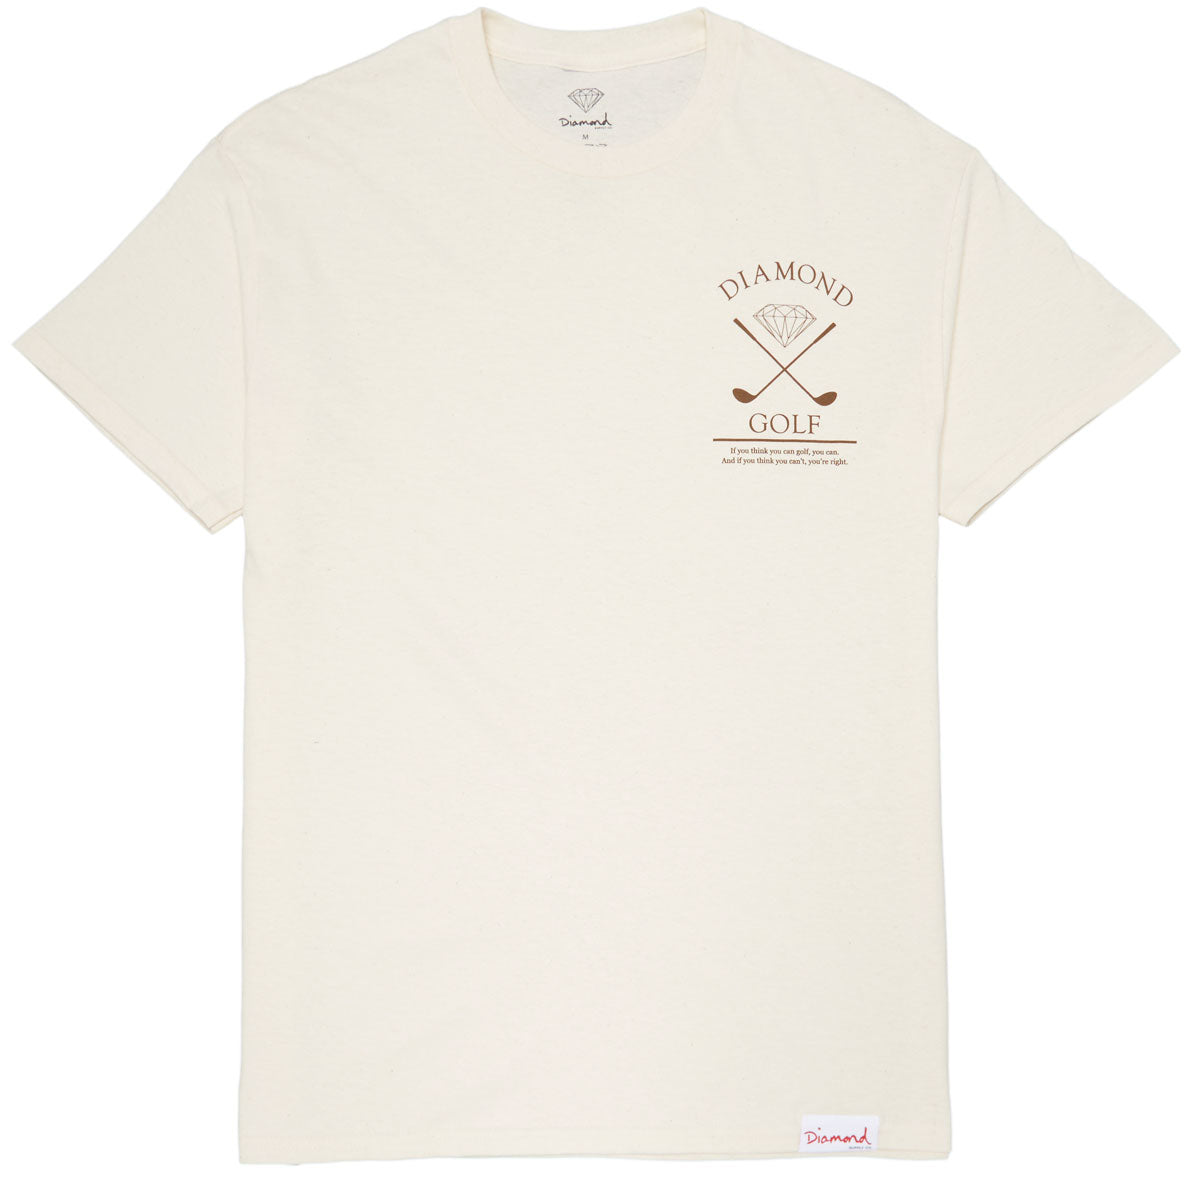 Diamond Supply Co. Golf T-Shirt - Cream image 2